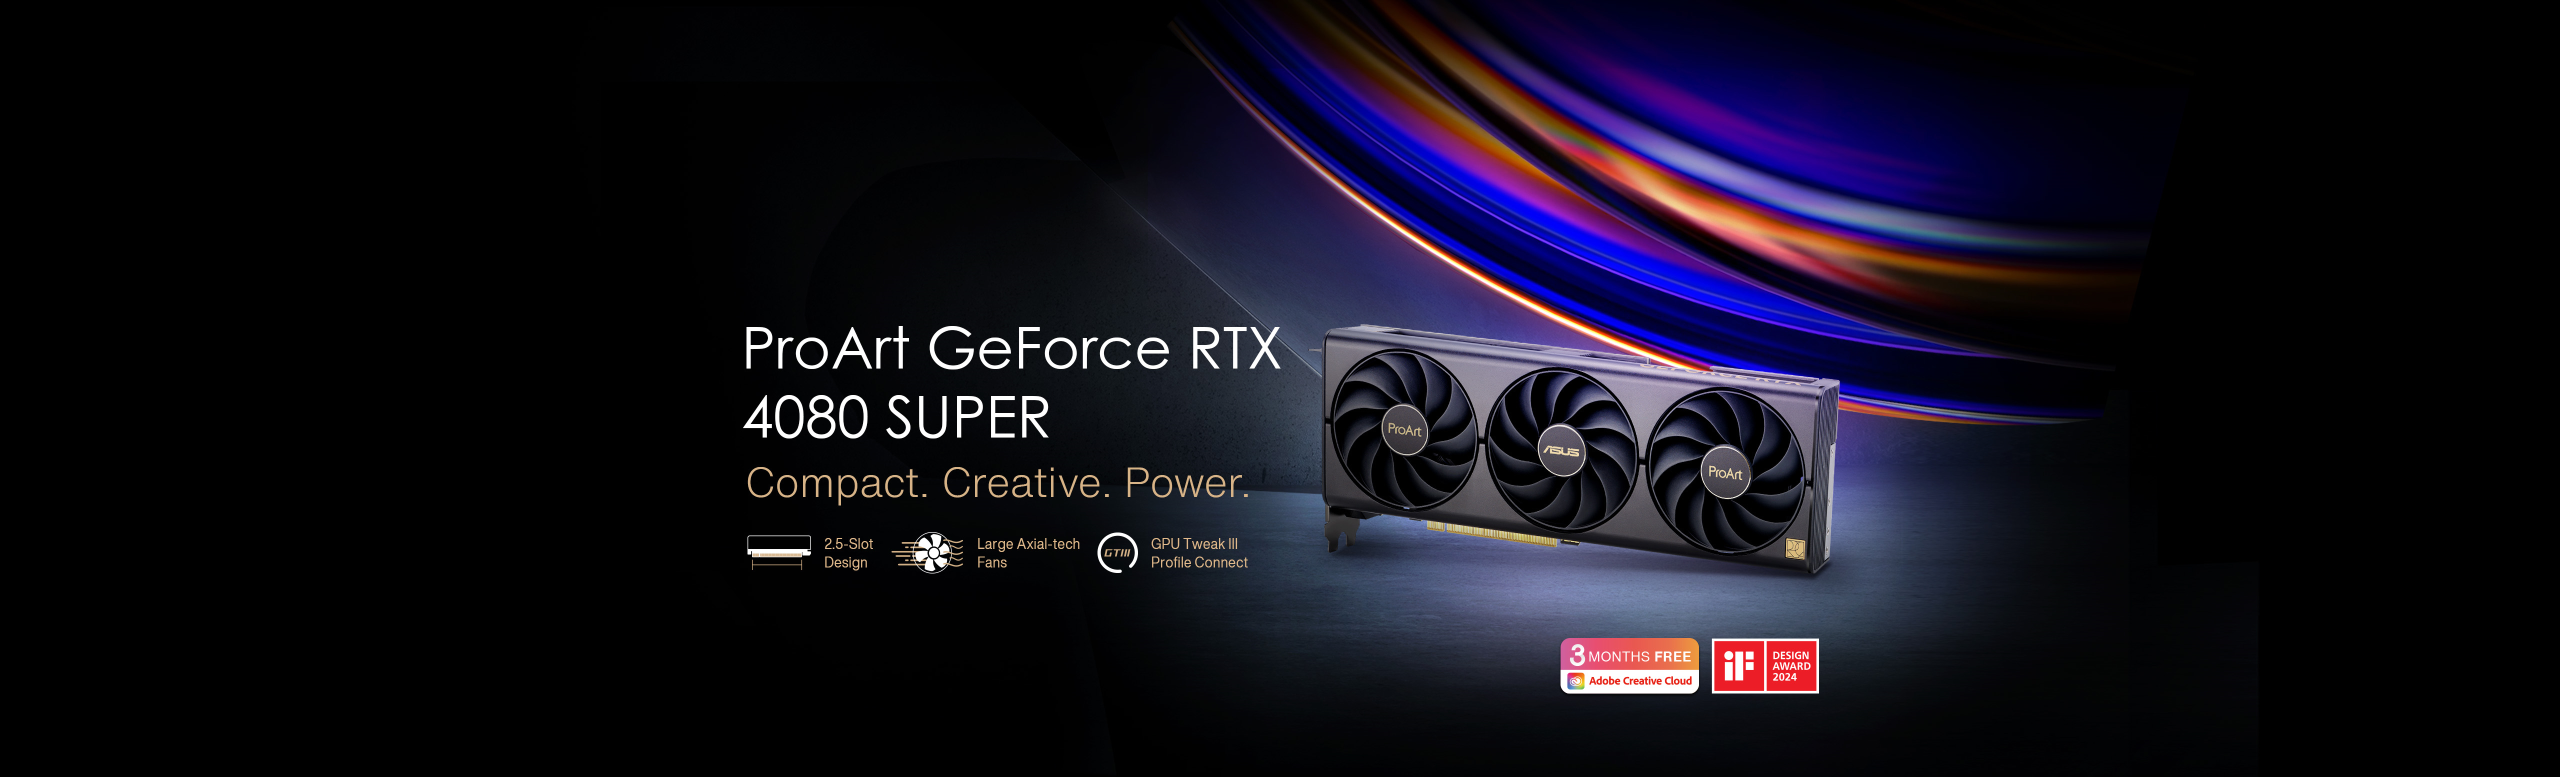 ProArt GeForce RTX 4080 SUPER